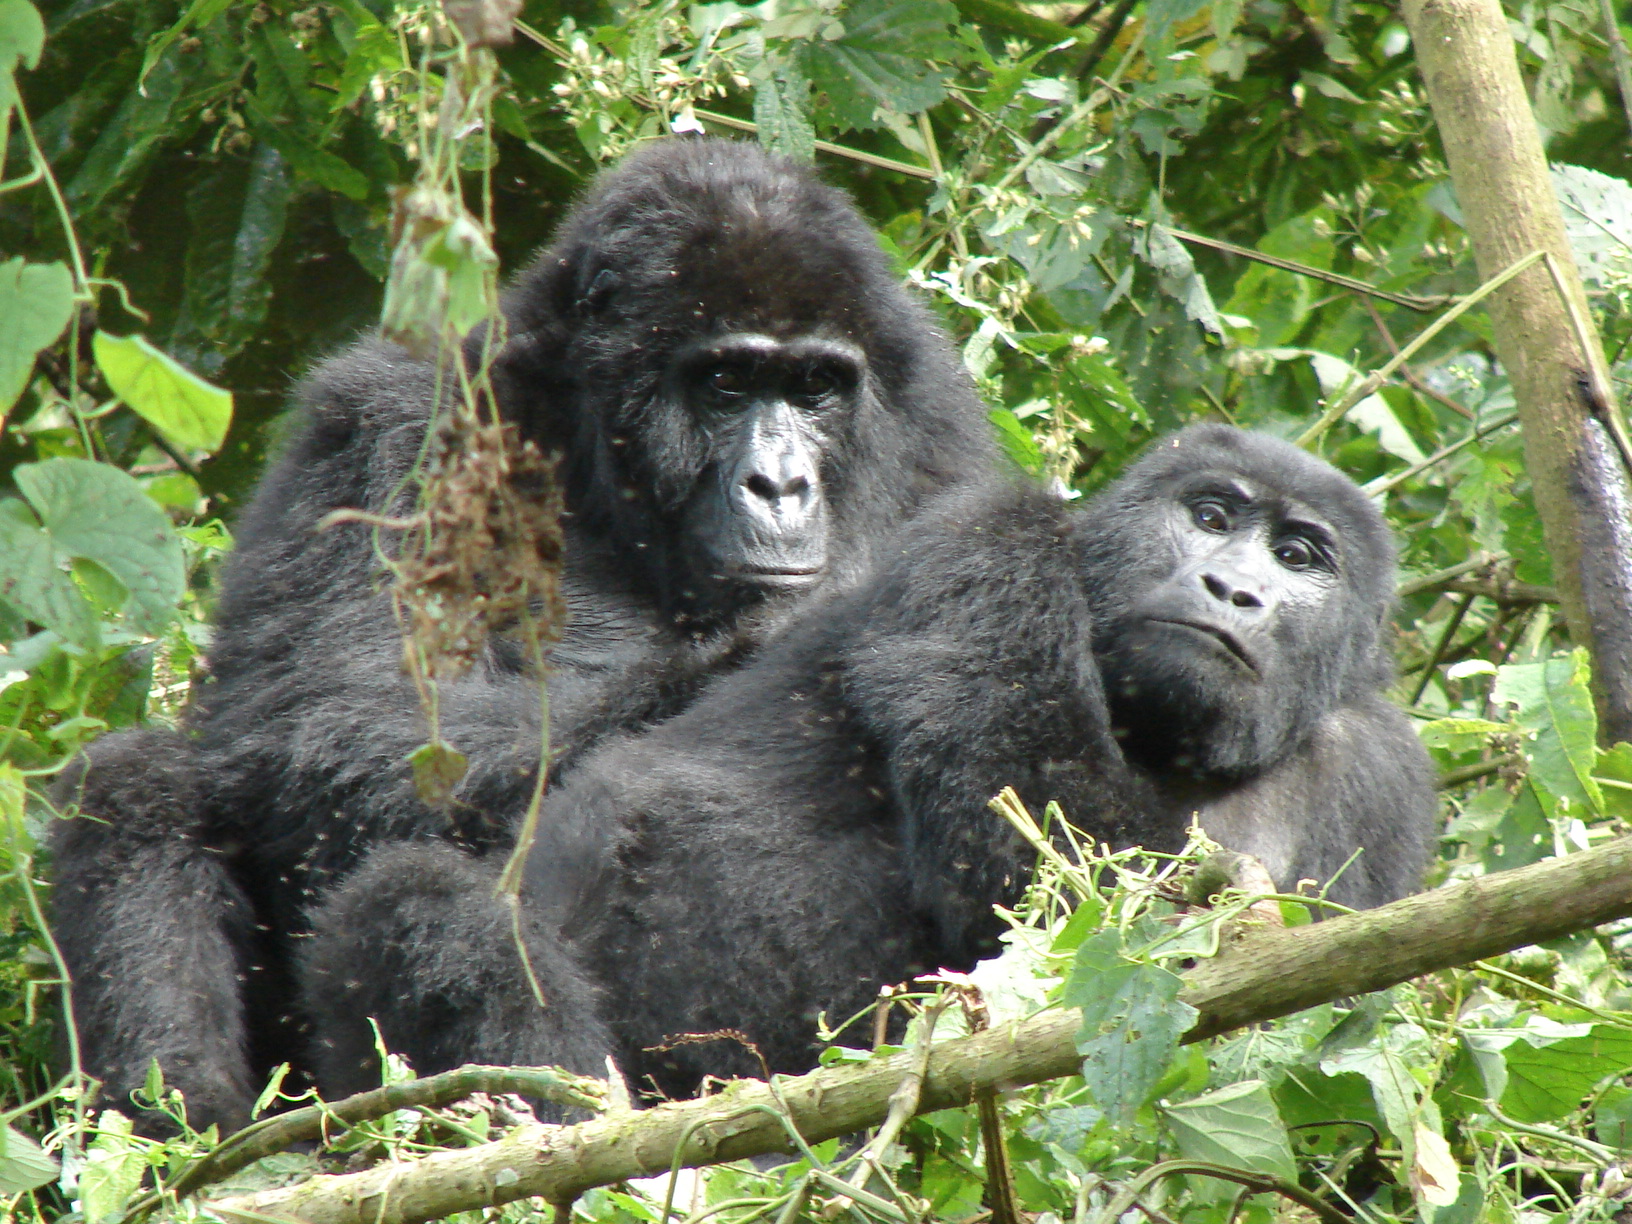 Uganda gorilla safari, Uganda gorilla tour - seeing mountain gorillas in Biwindi